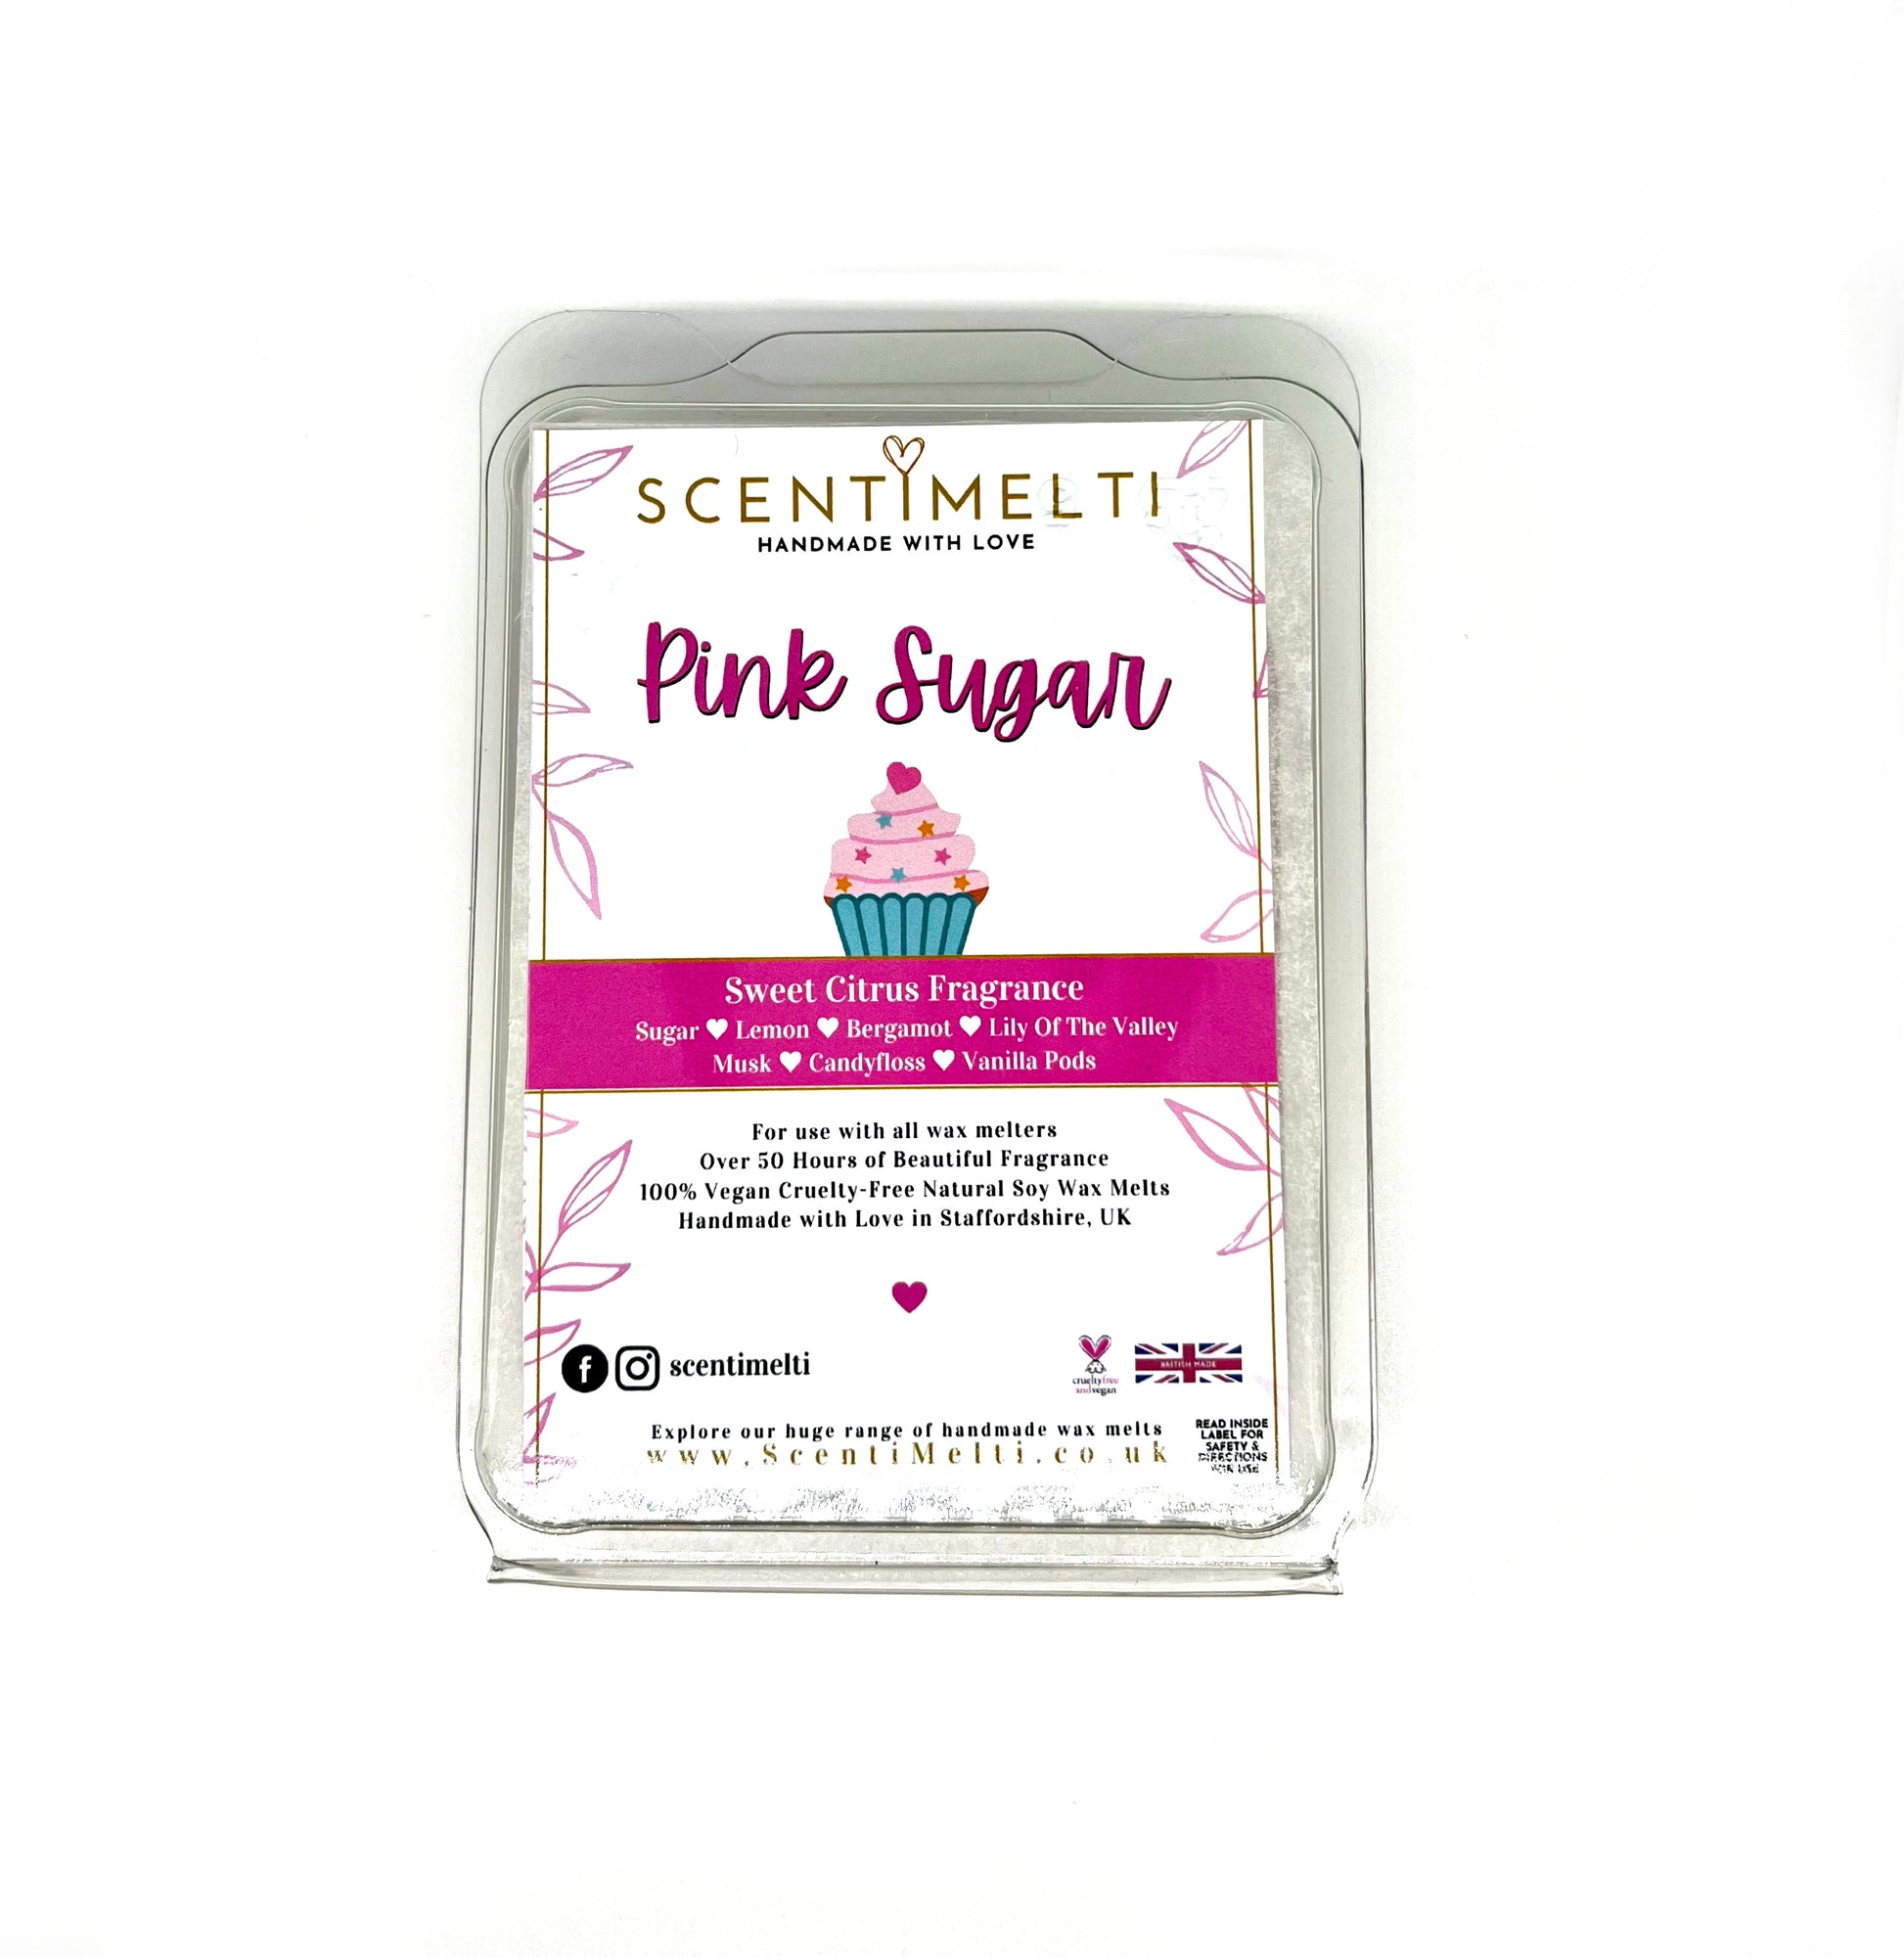 Pink Sugar Heart Clamshell Wax Melts - ScentiMelti  Pink Sugar Heart Clamshell Wax Melts